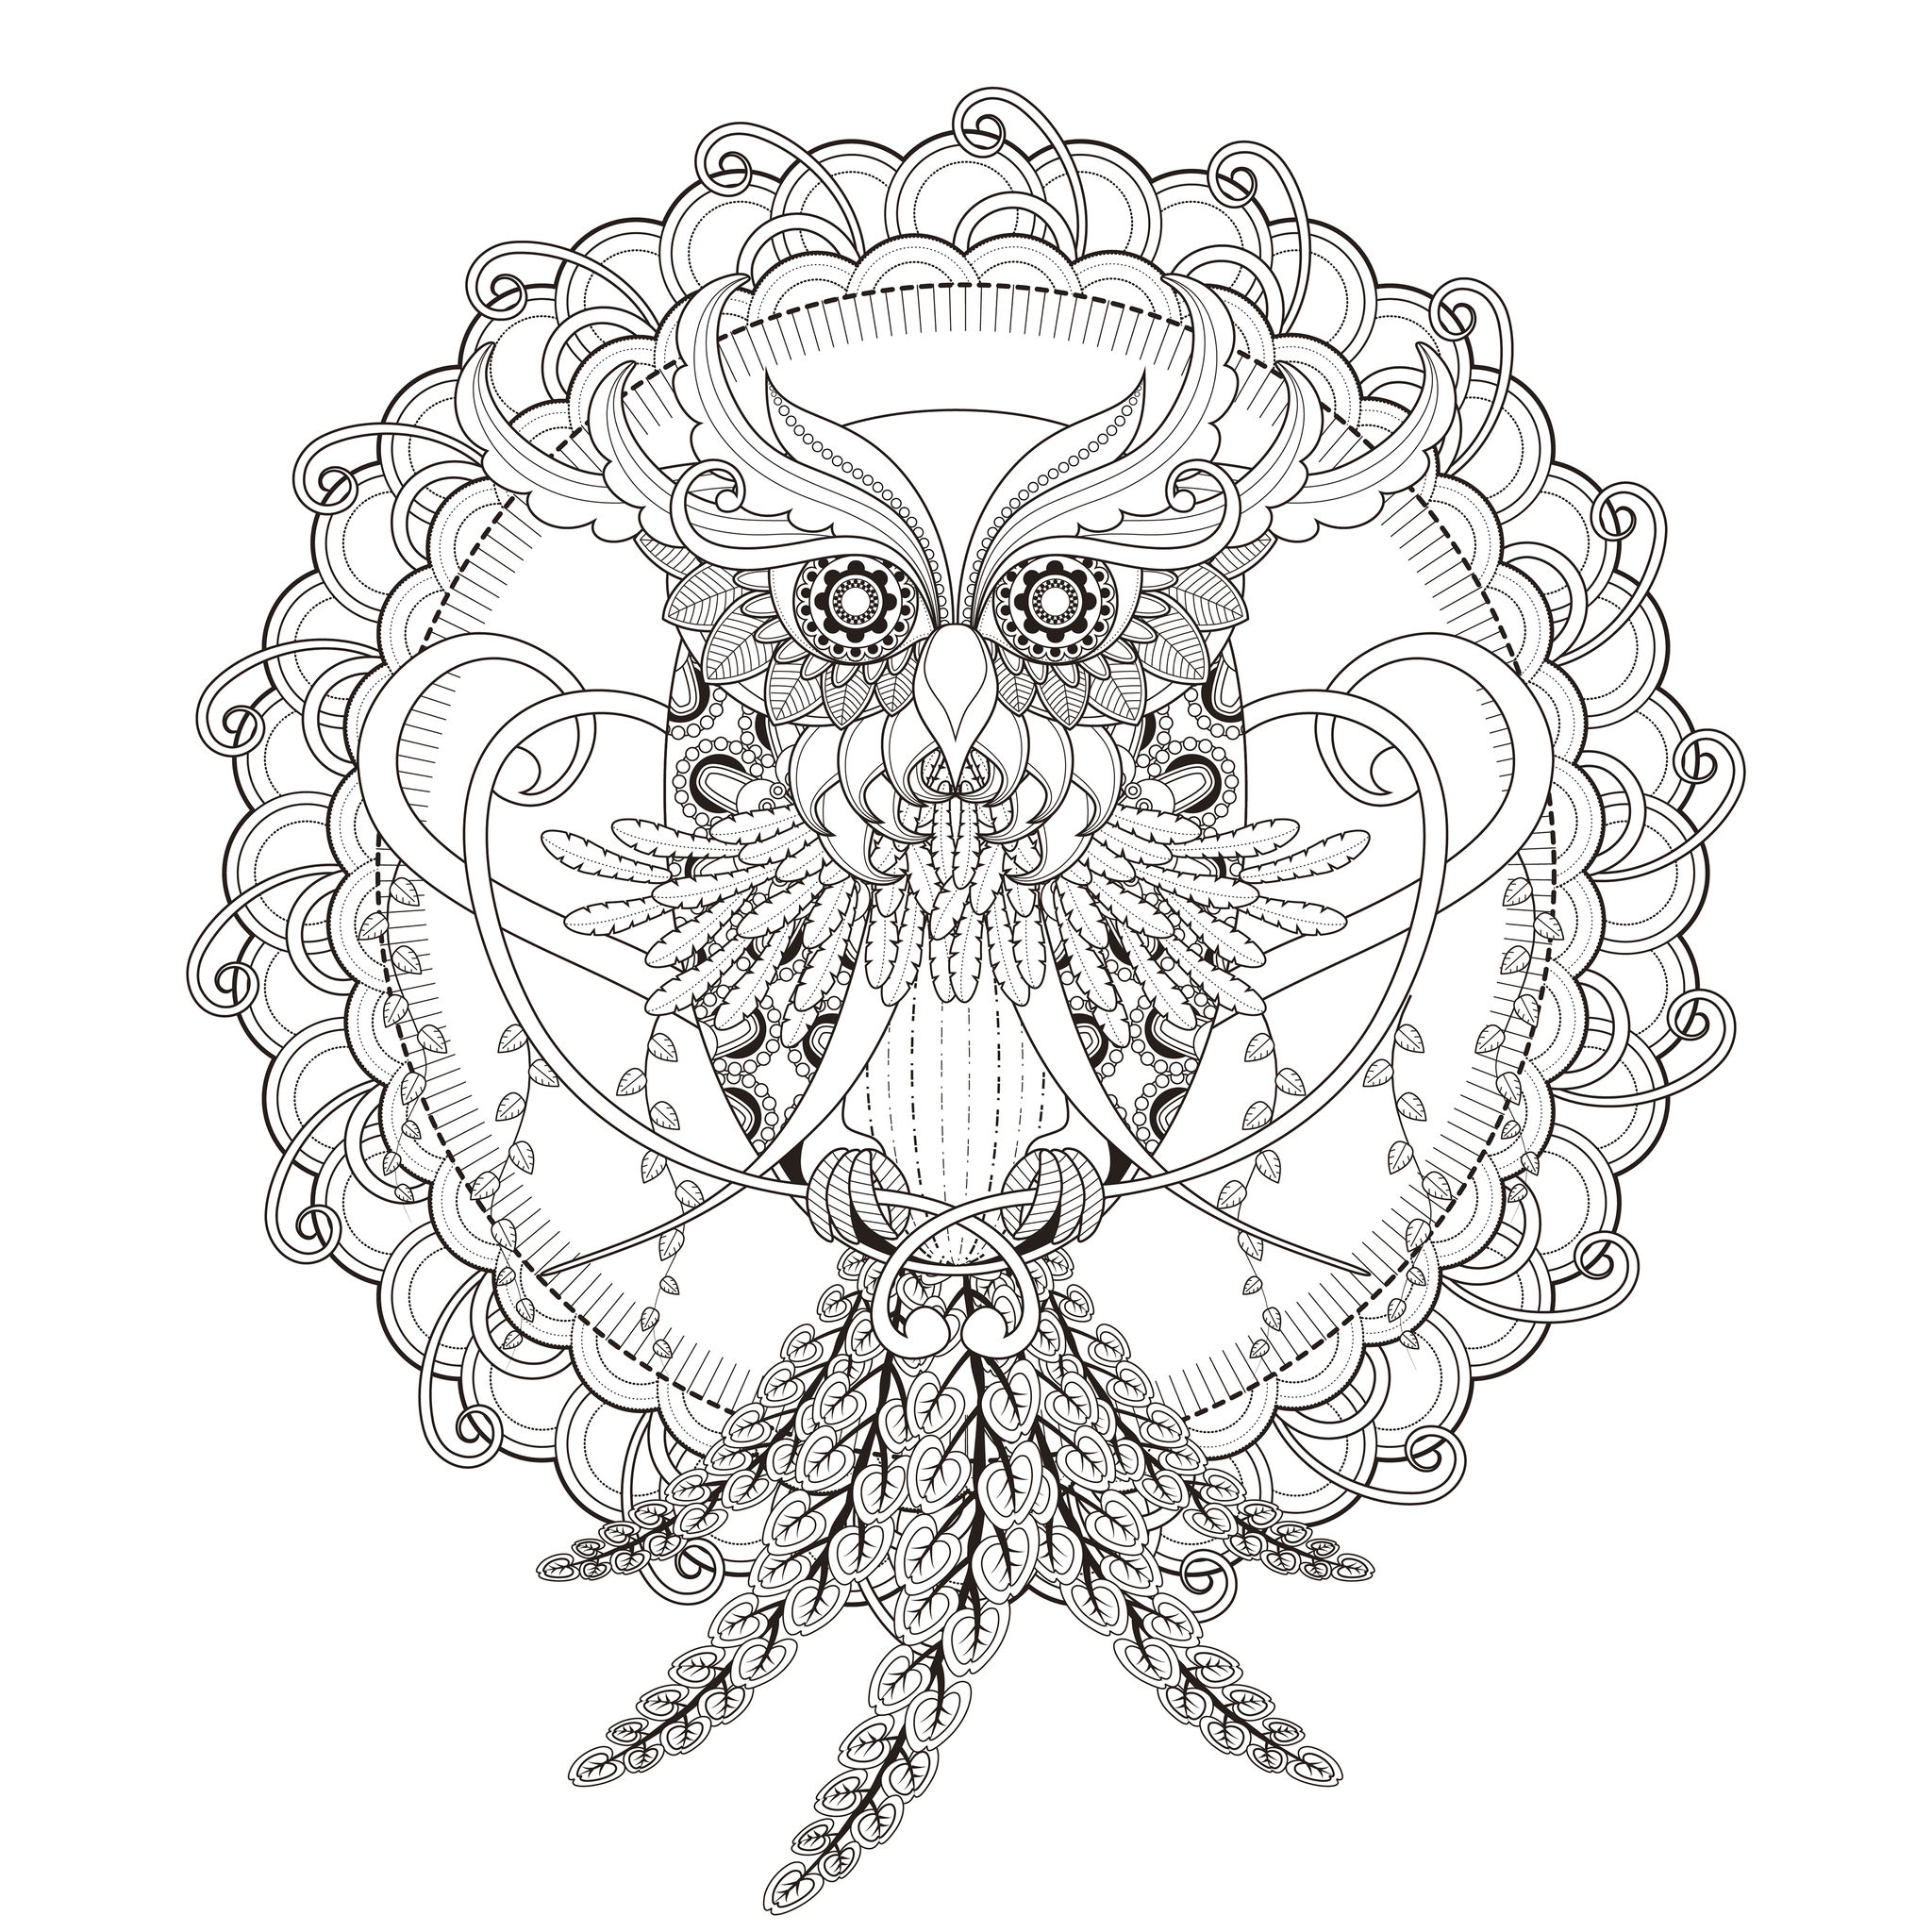 INCREDIBLE Owl Mandala coloring page, Artist : Kchung   Source : 123rf